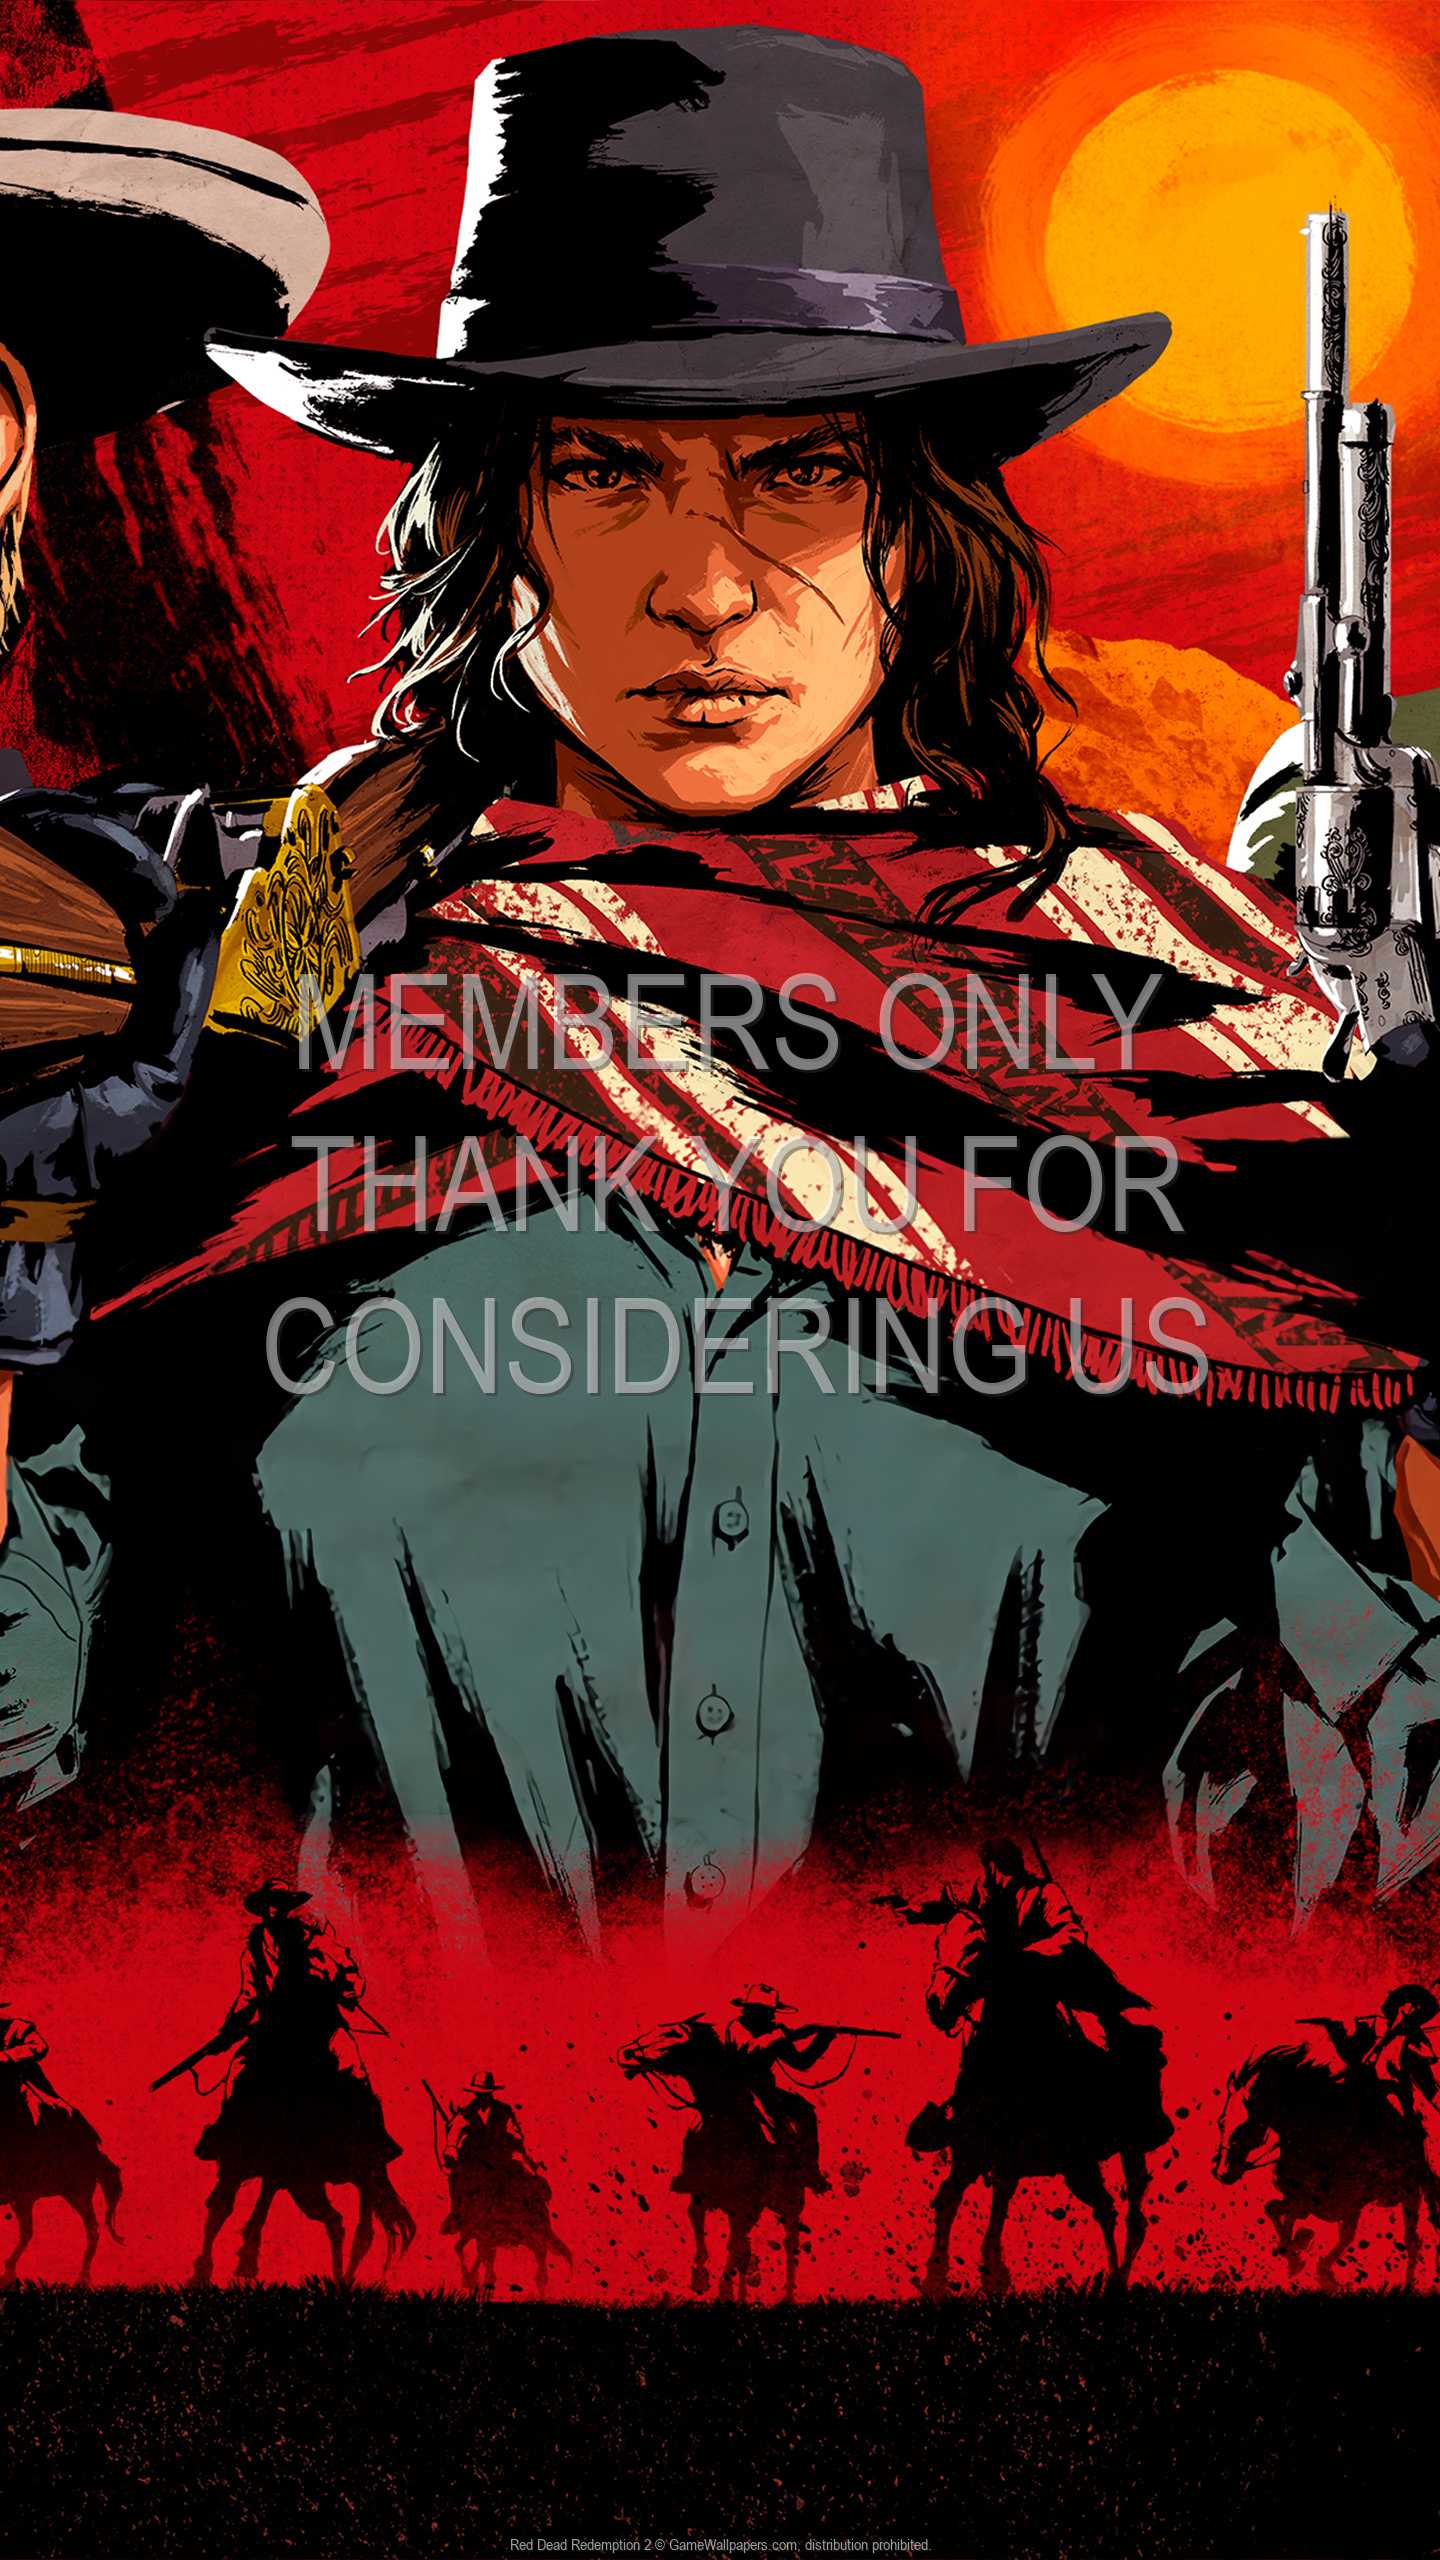 Red Dead Redemption 2 1440p Vertical Mobile wallpaper or background 06